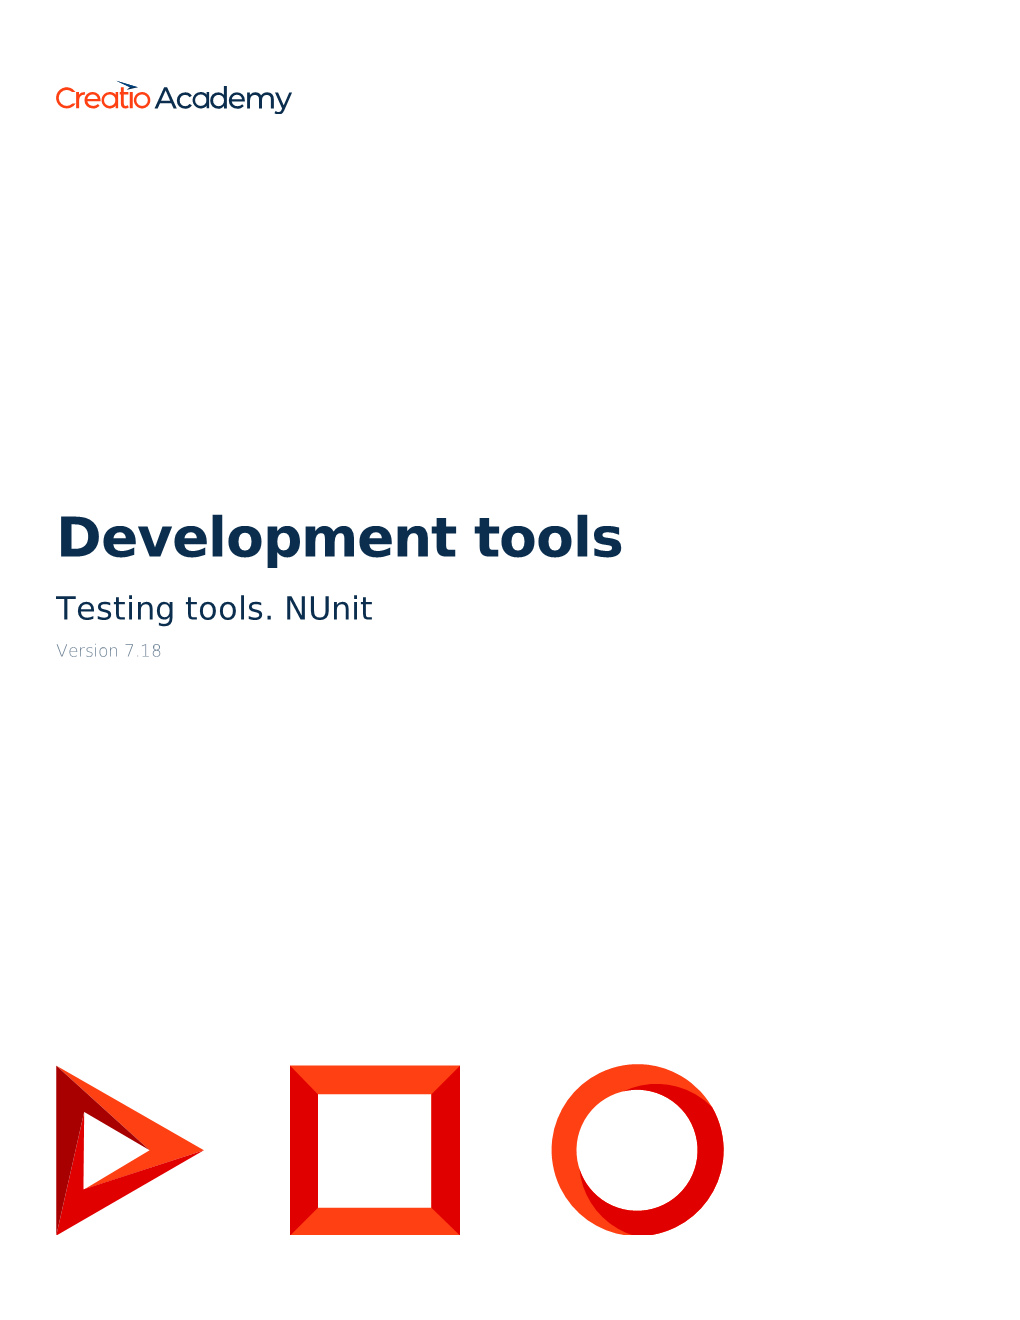 Development Tools Testing Tools